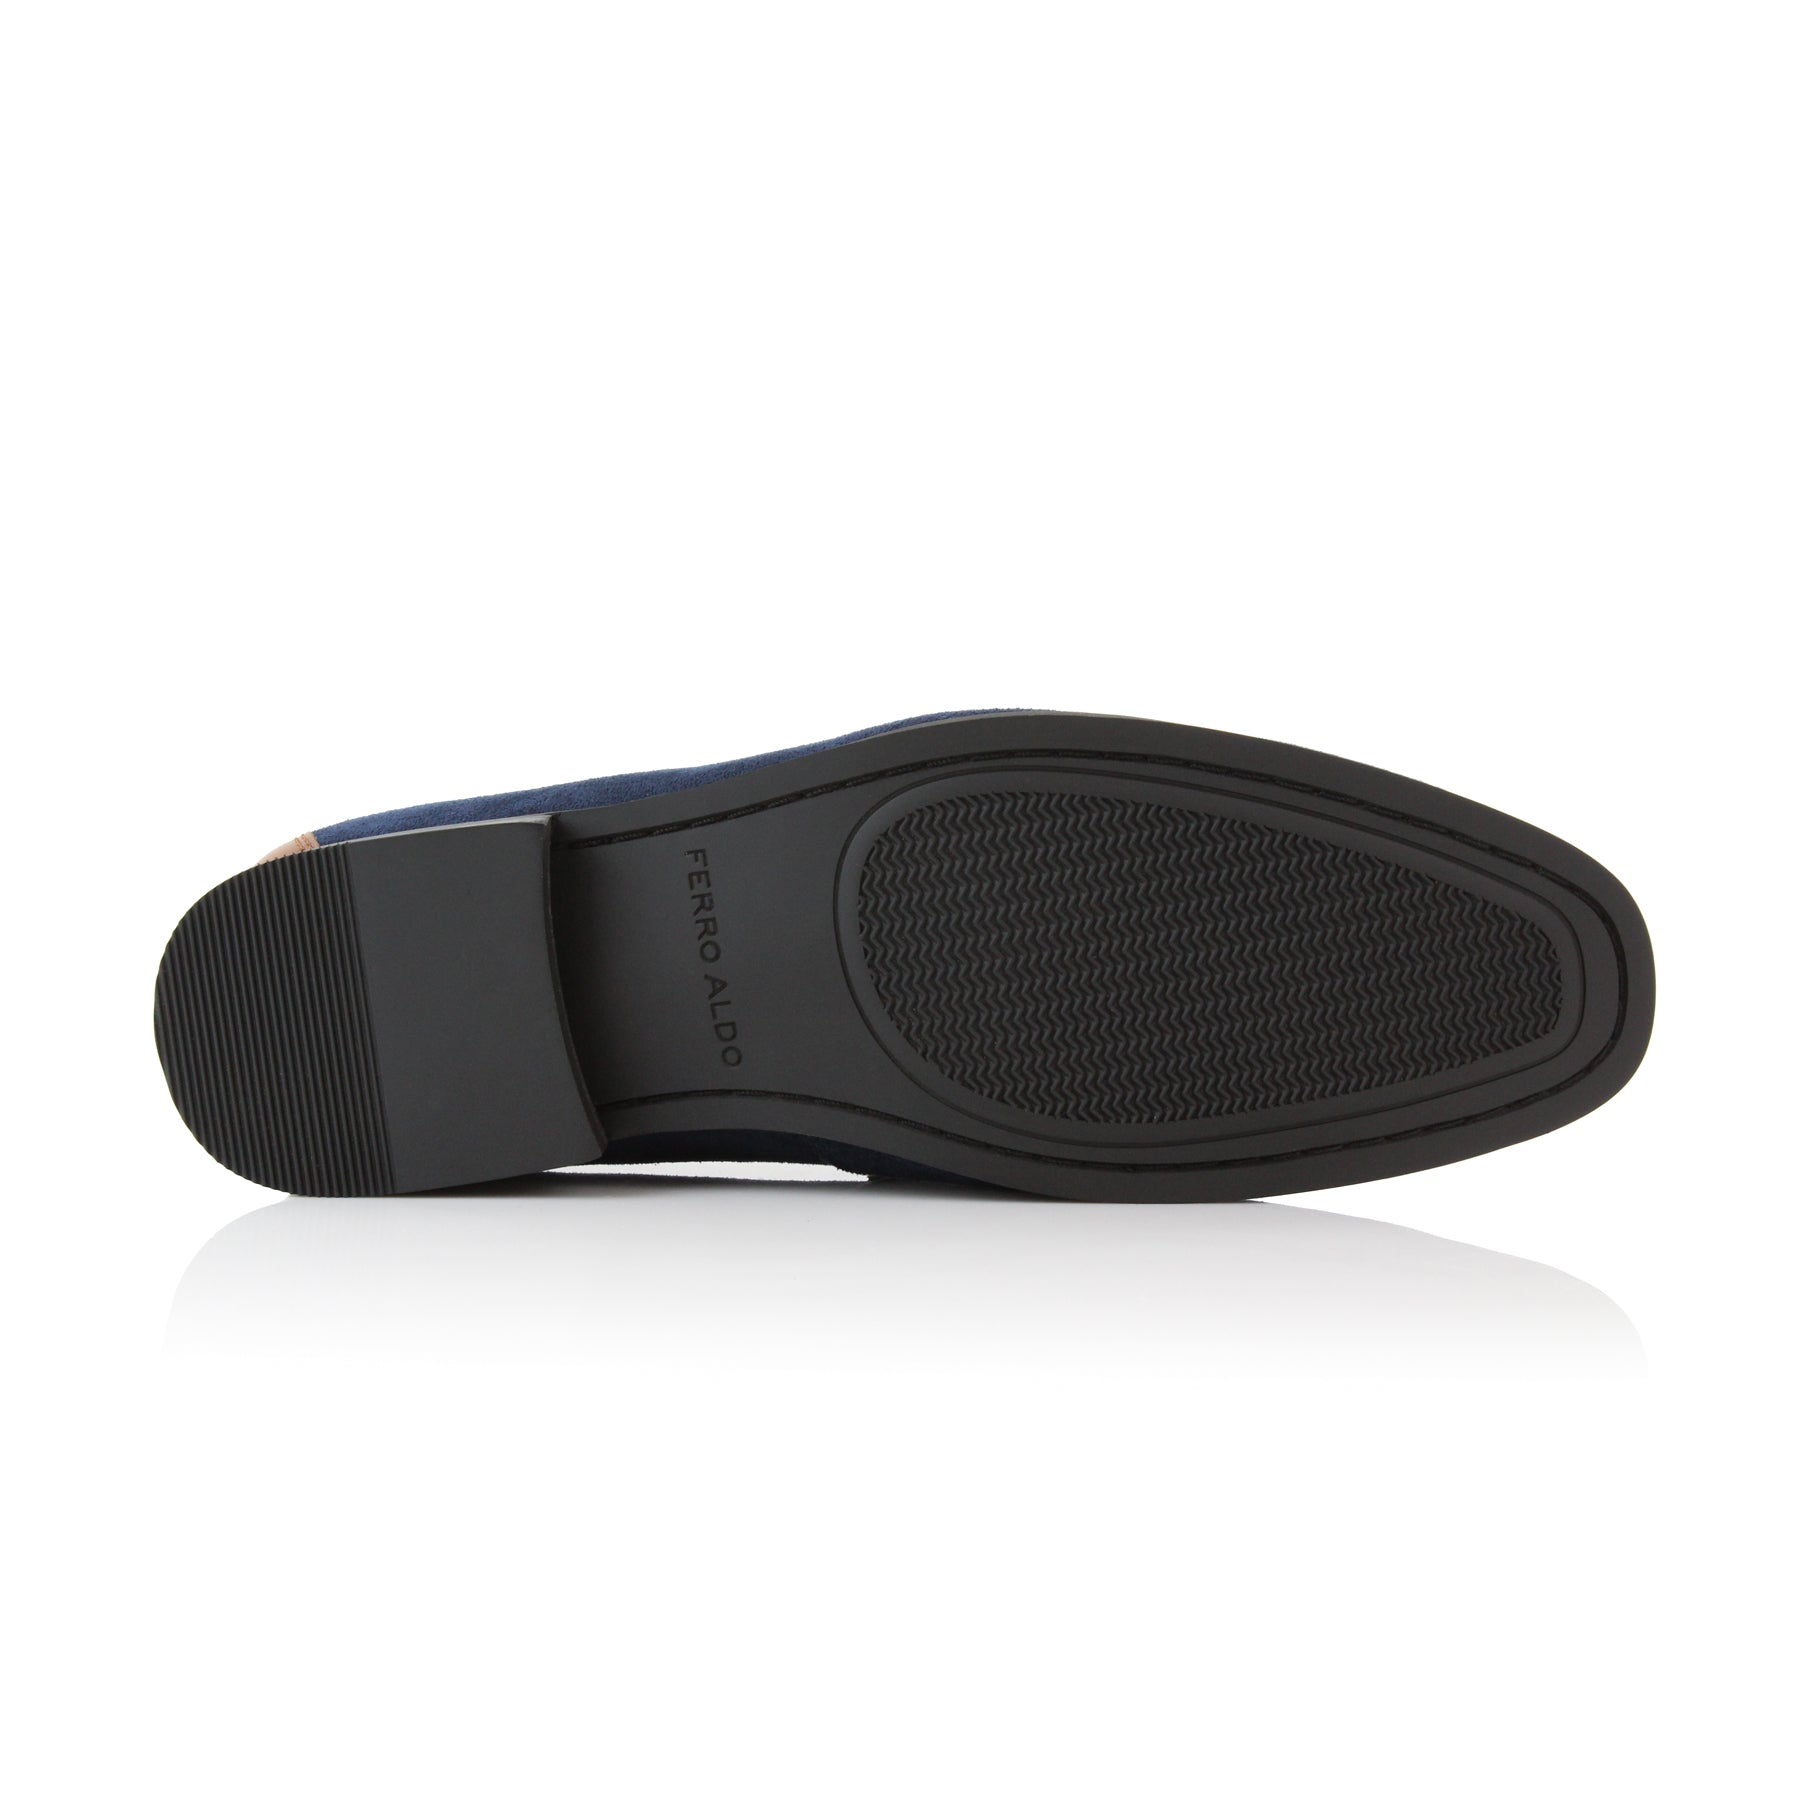 Buckled Suede Loafers | Dante by Ferro Aldo | Conal Footwear | Bottom Sole Angle View